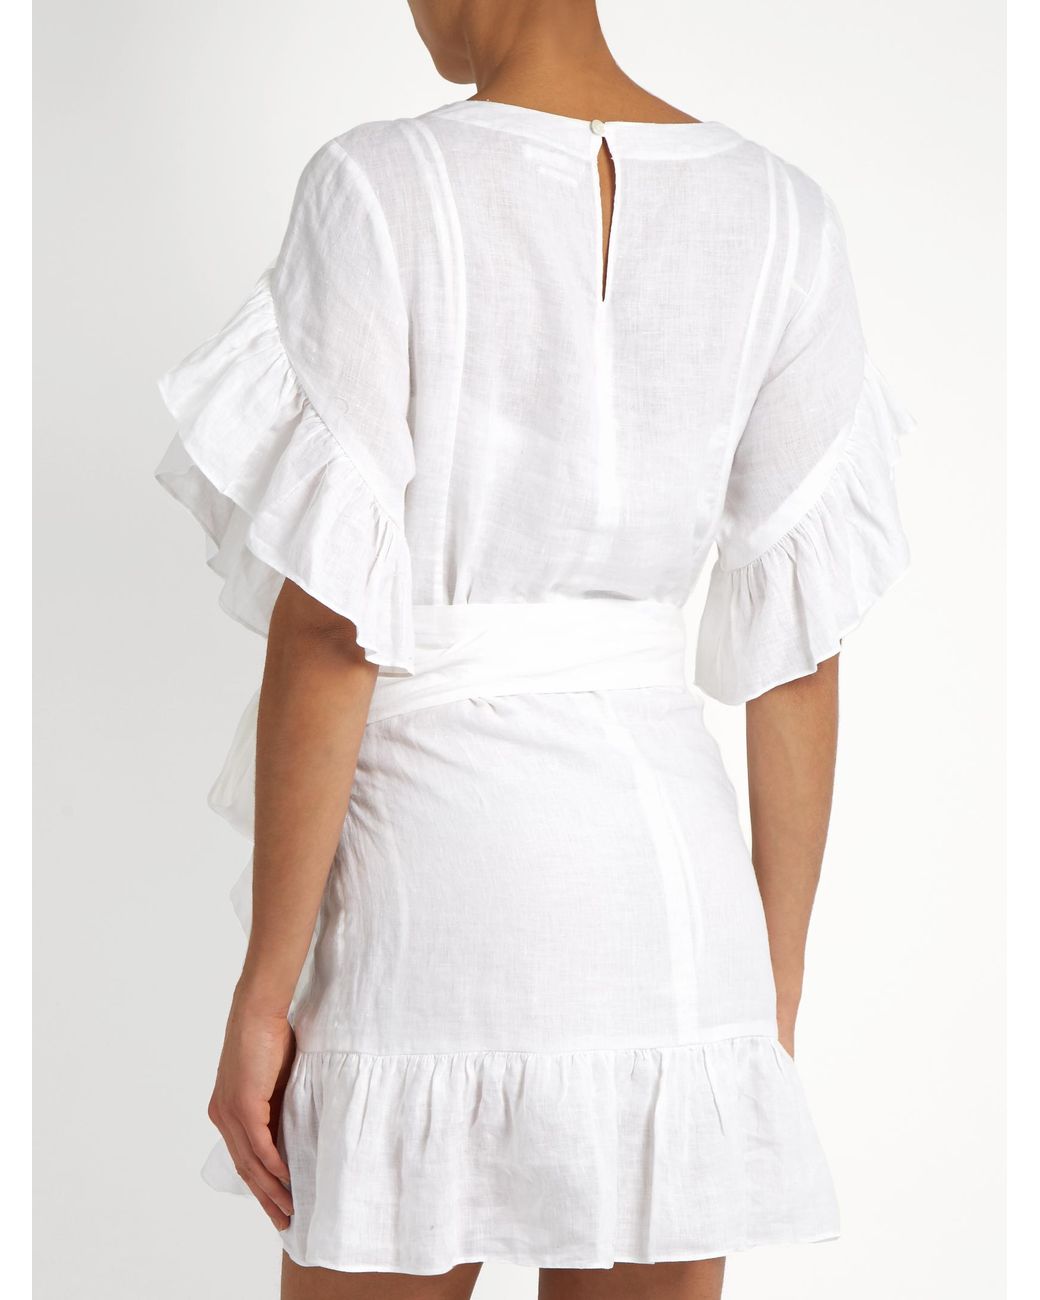 Étoile Marant Delicia Ruffled Dress in White | Lyst